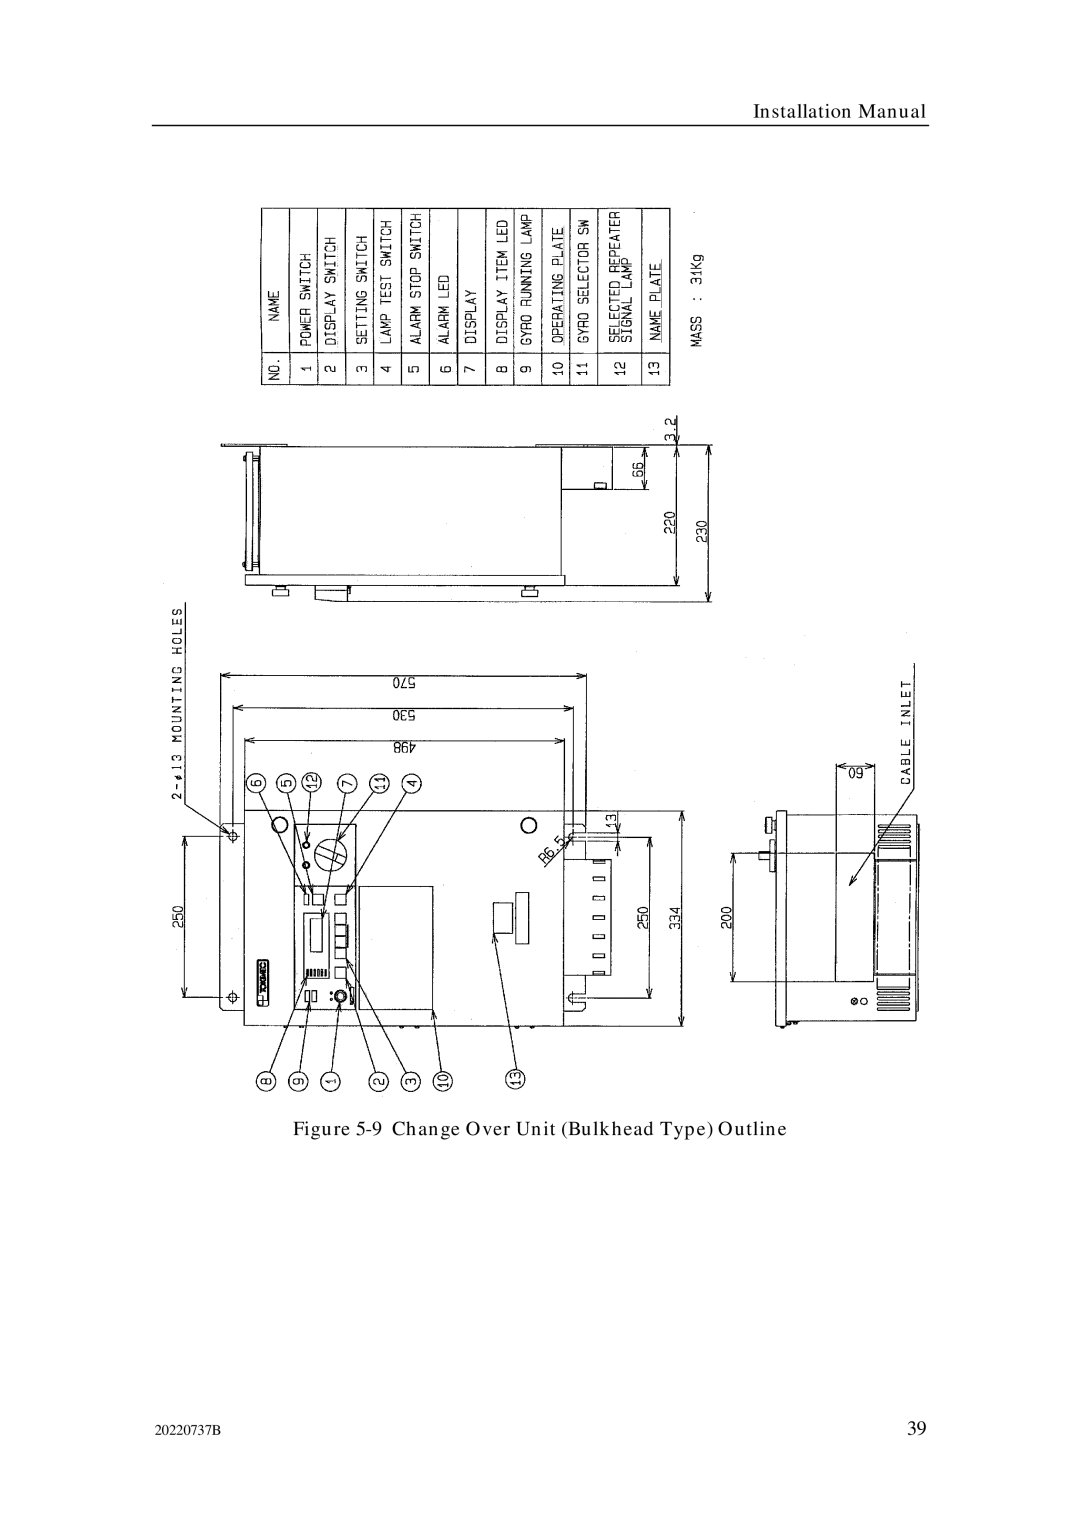 Simrad RGC12 manual Change Over Unit Bulkhead Type Outline 